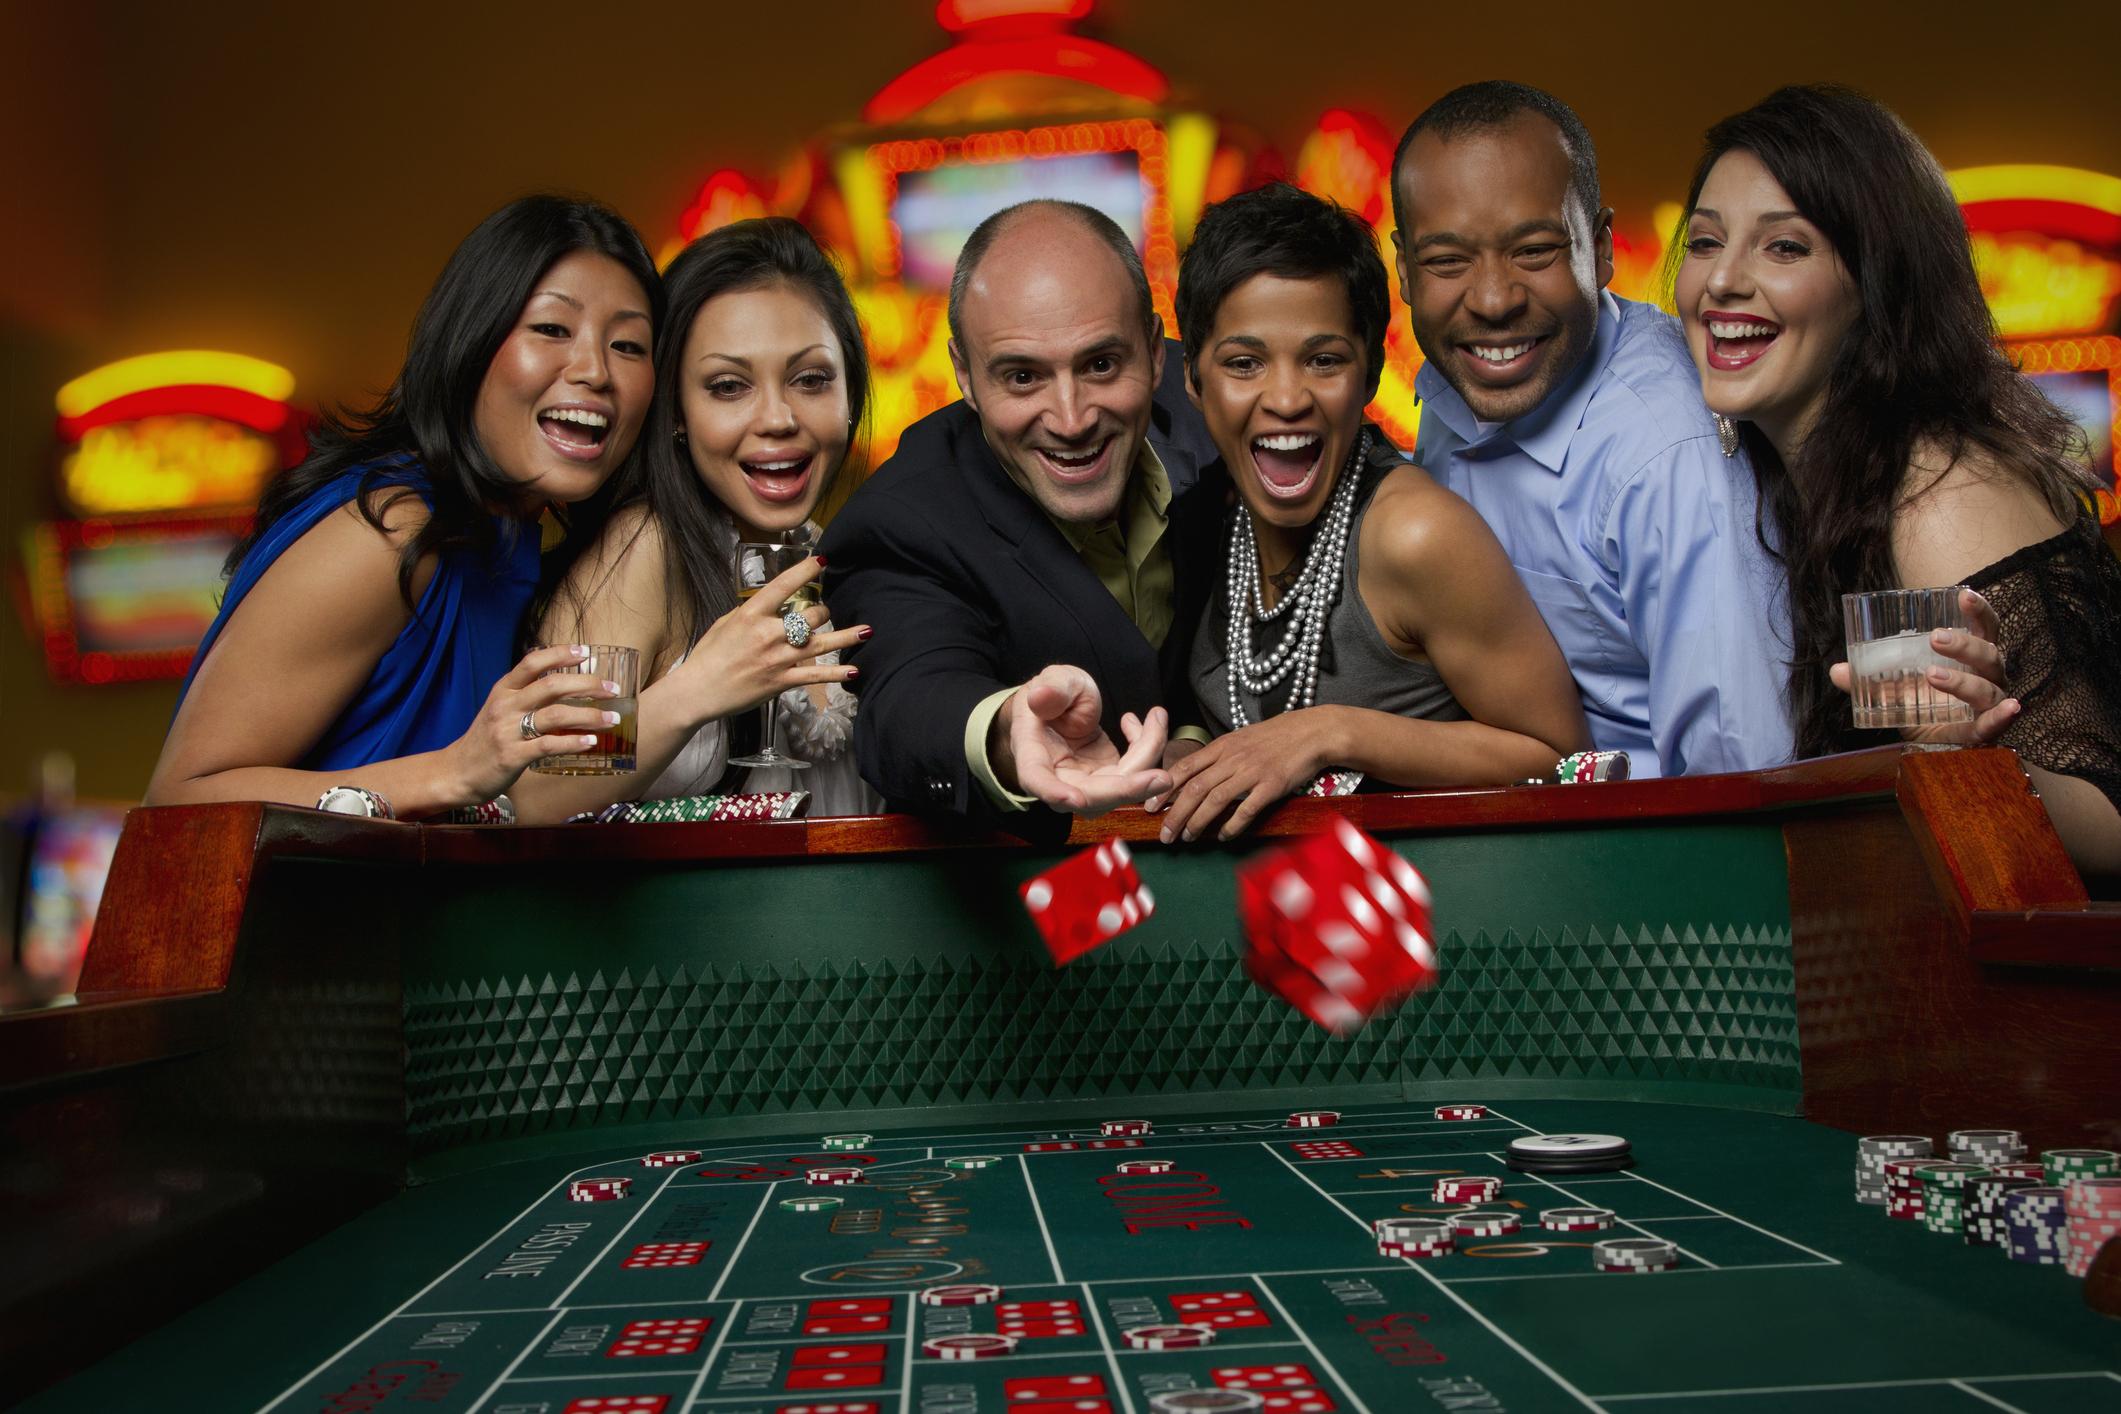 Variety of Online Casino Games in Missouri